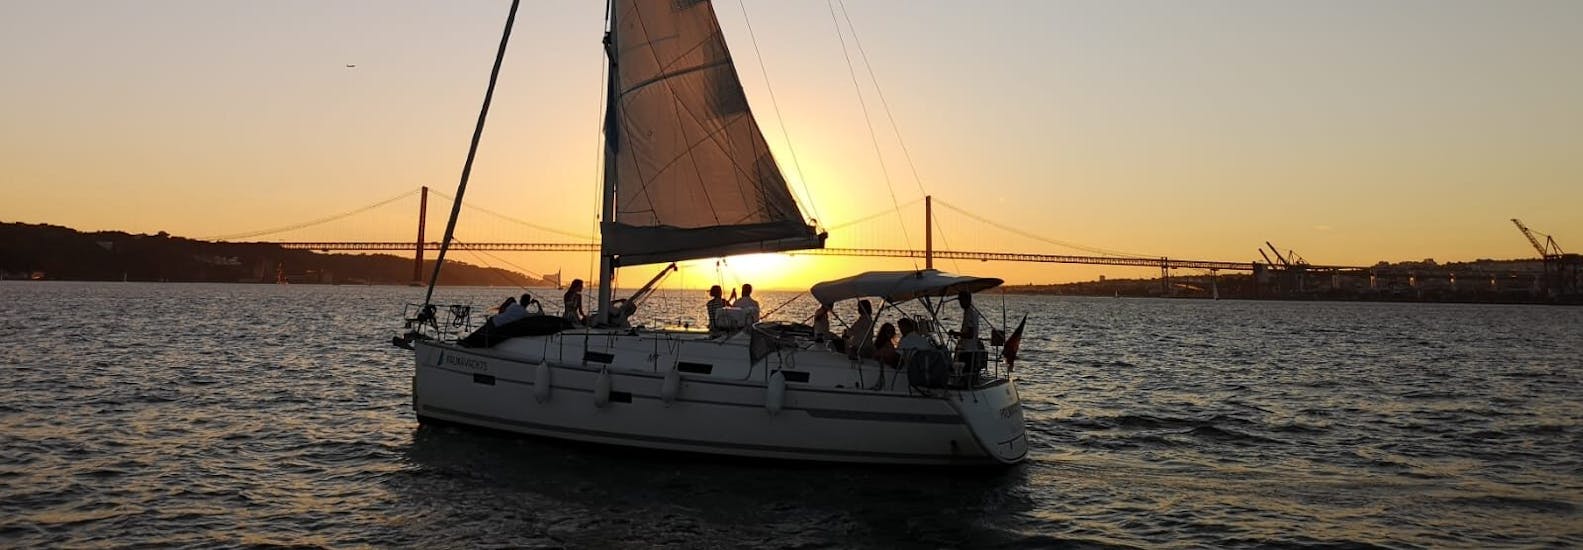 Gita in barca a vela da Doca de Belém a Tago al tramonto e visita turistica.